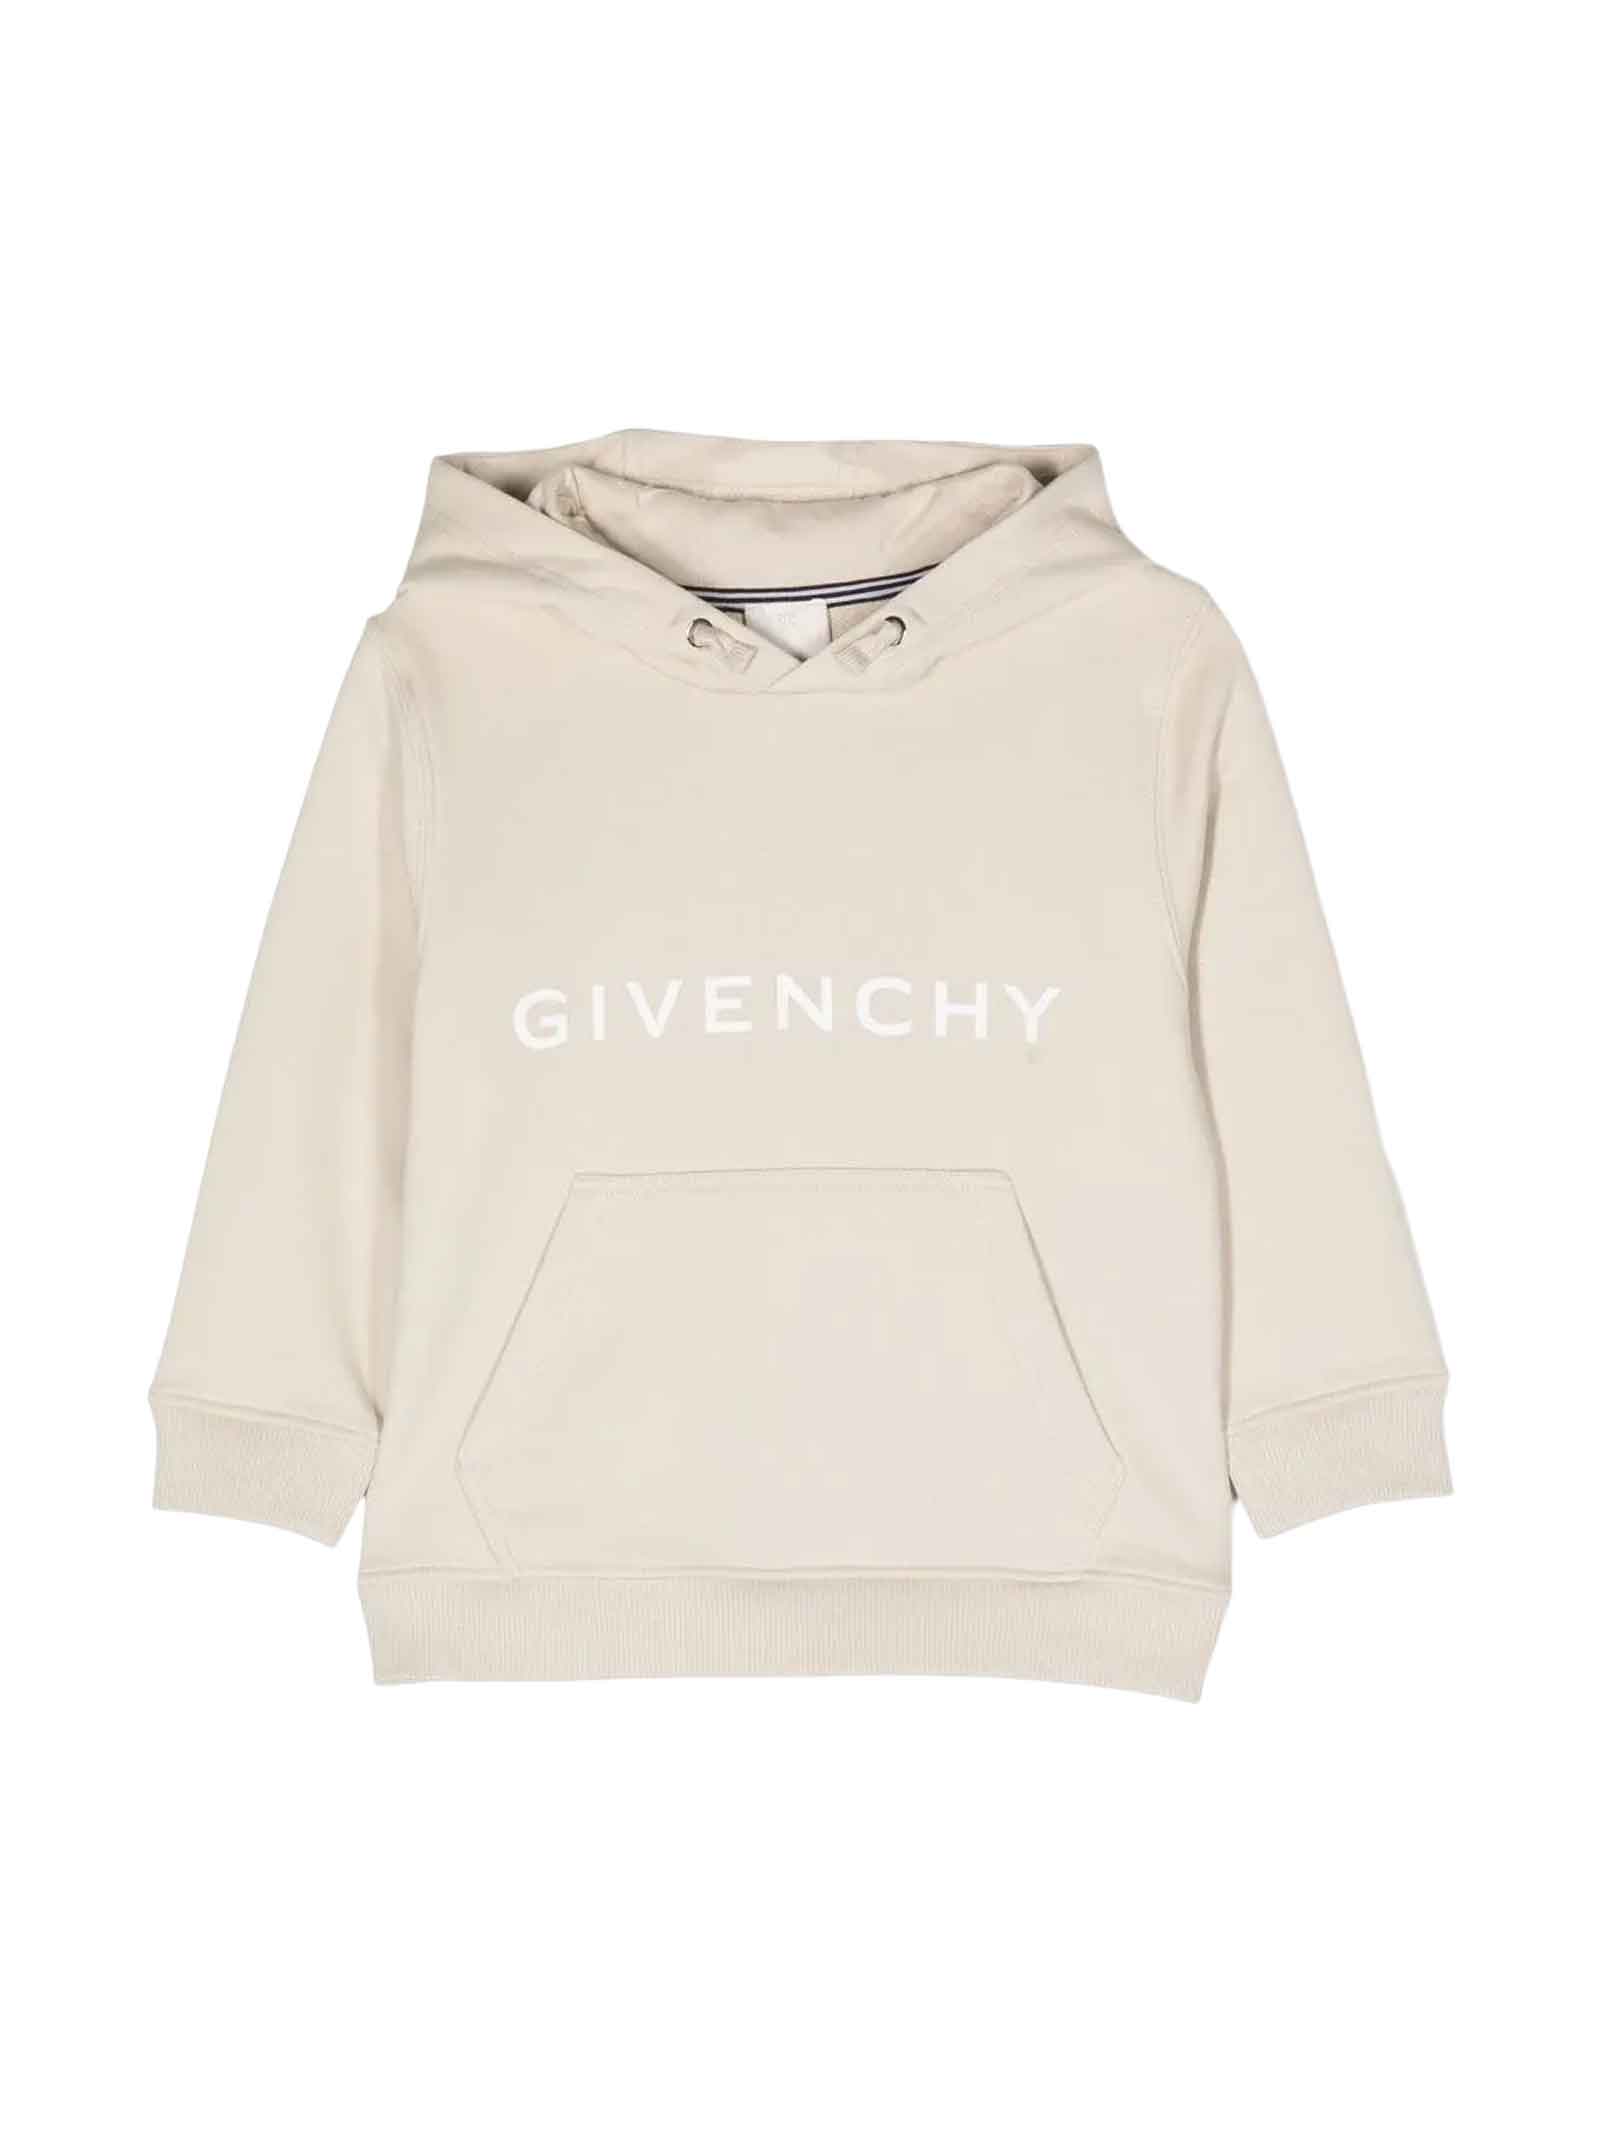 Givenchy Kids' Cream Sweatshirt Boy In Crema